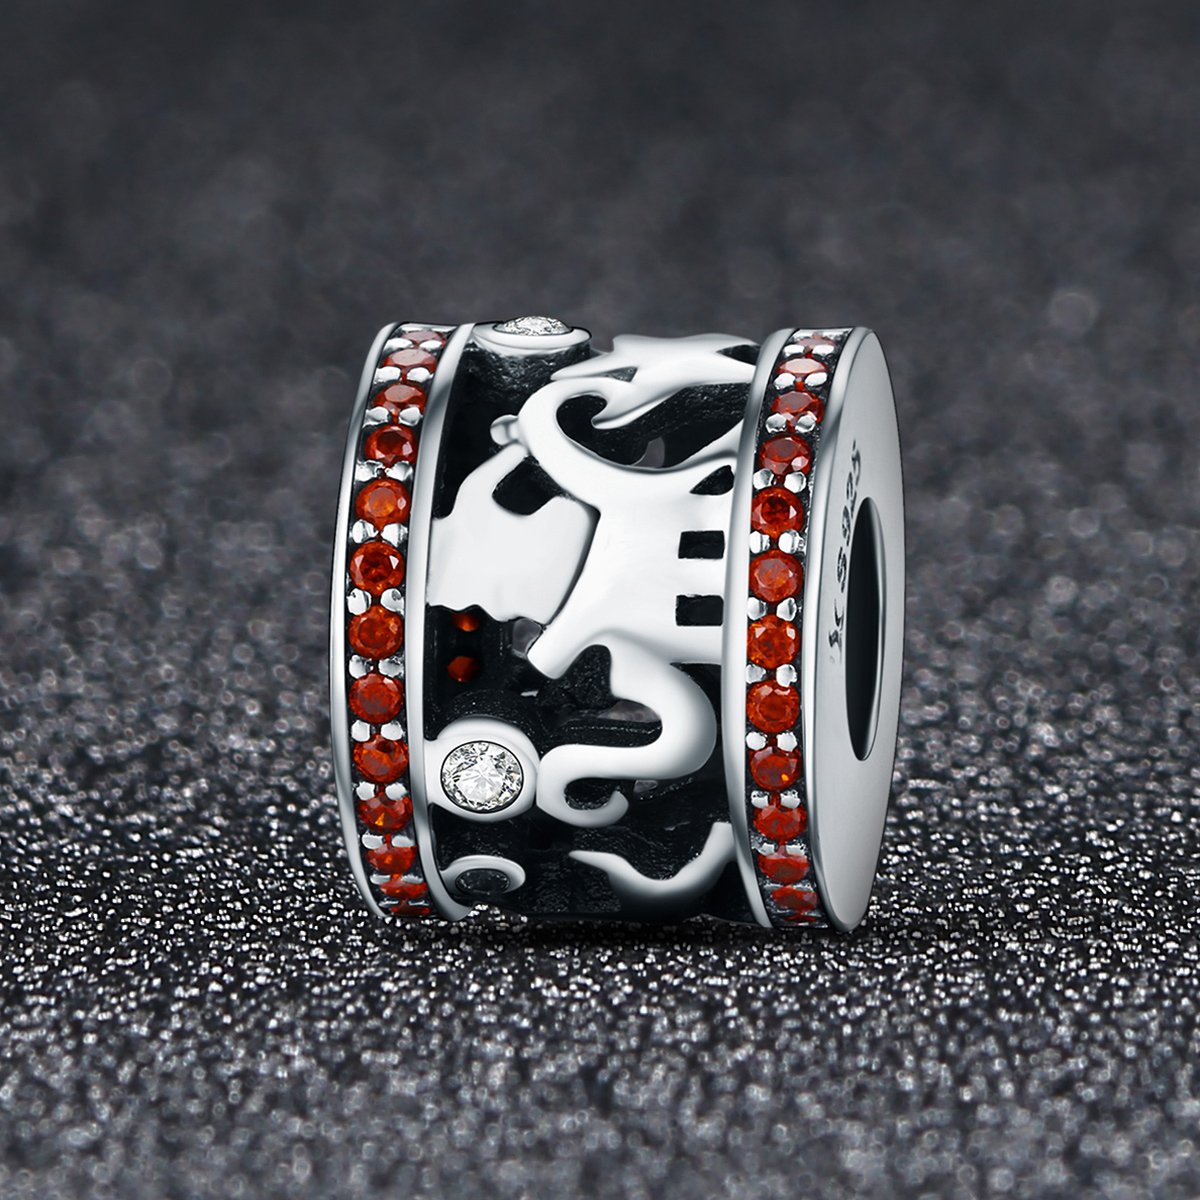 Sterling 925 silver charm the Moose bead pendant fits Pandora charm and European charm bracelet Xaxe.com